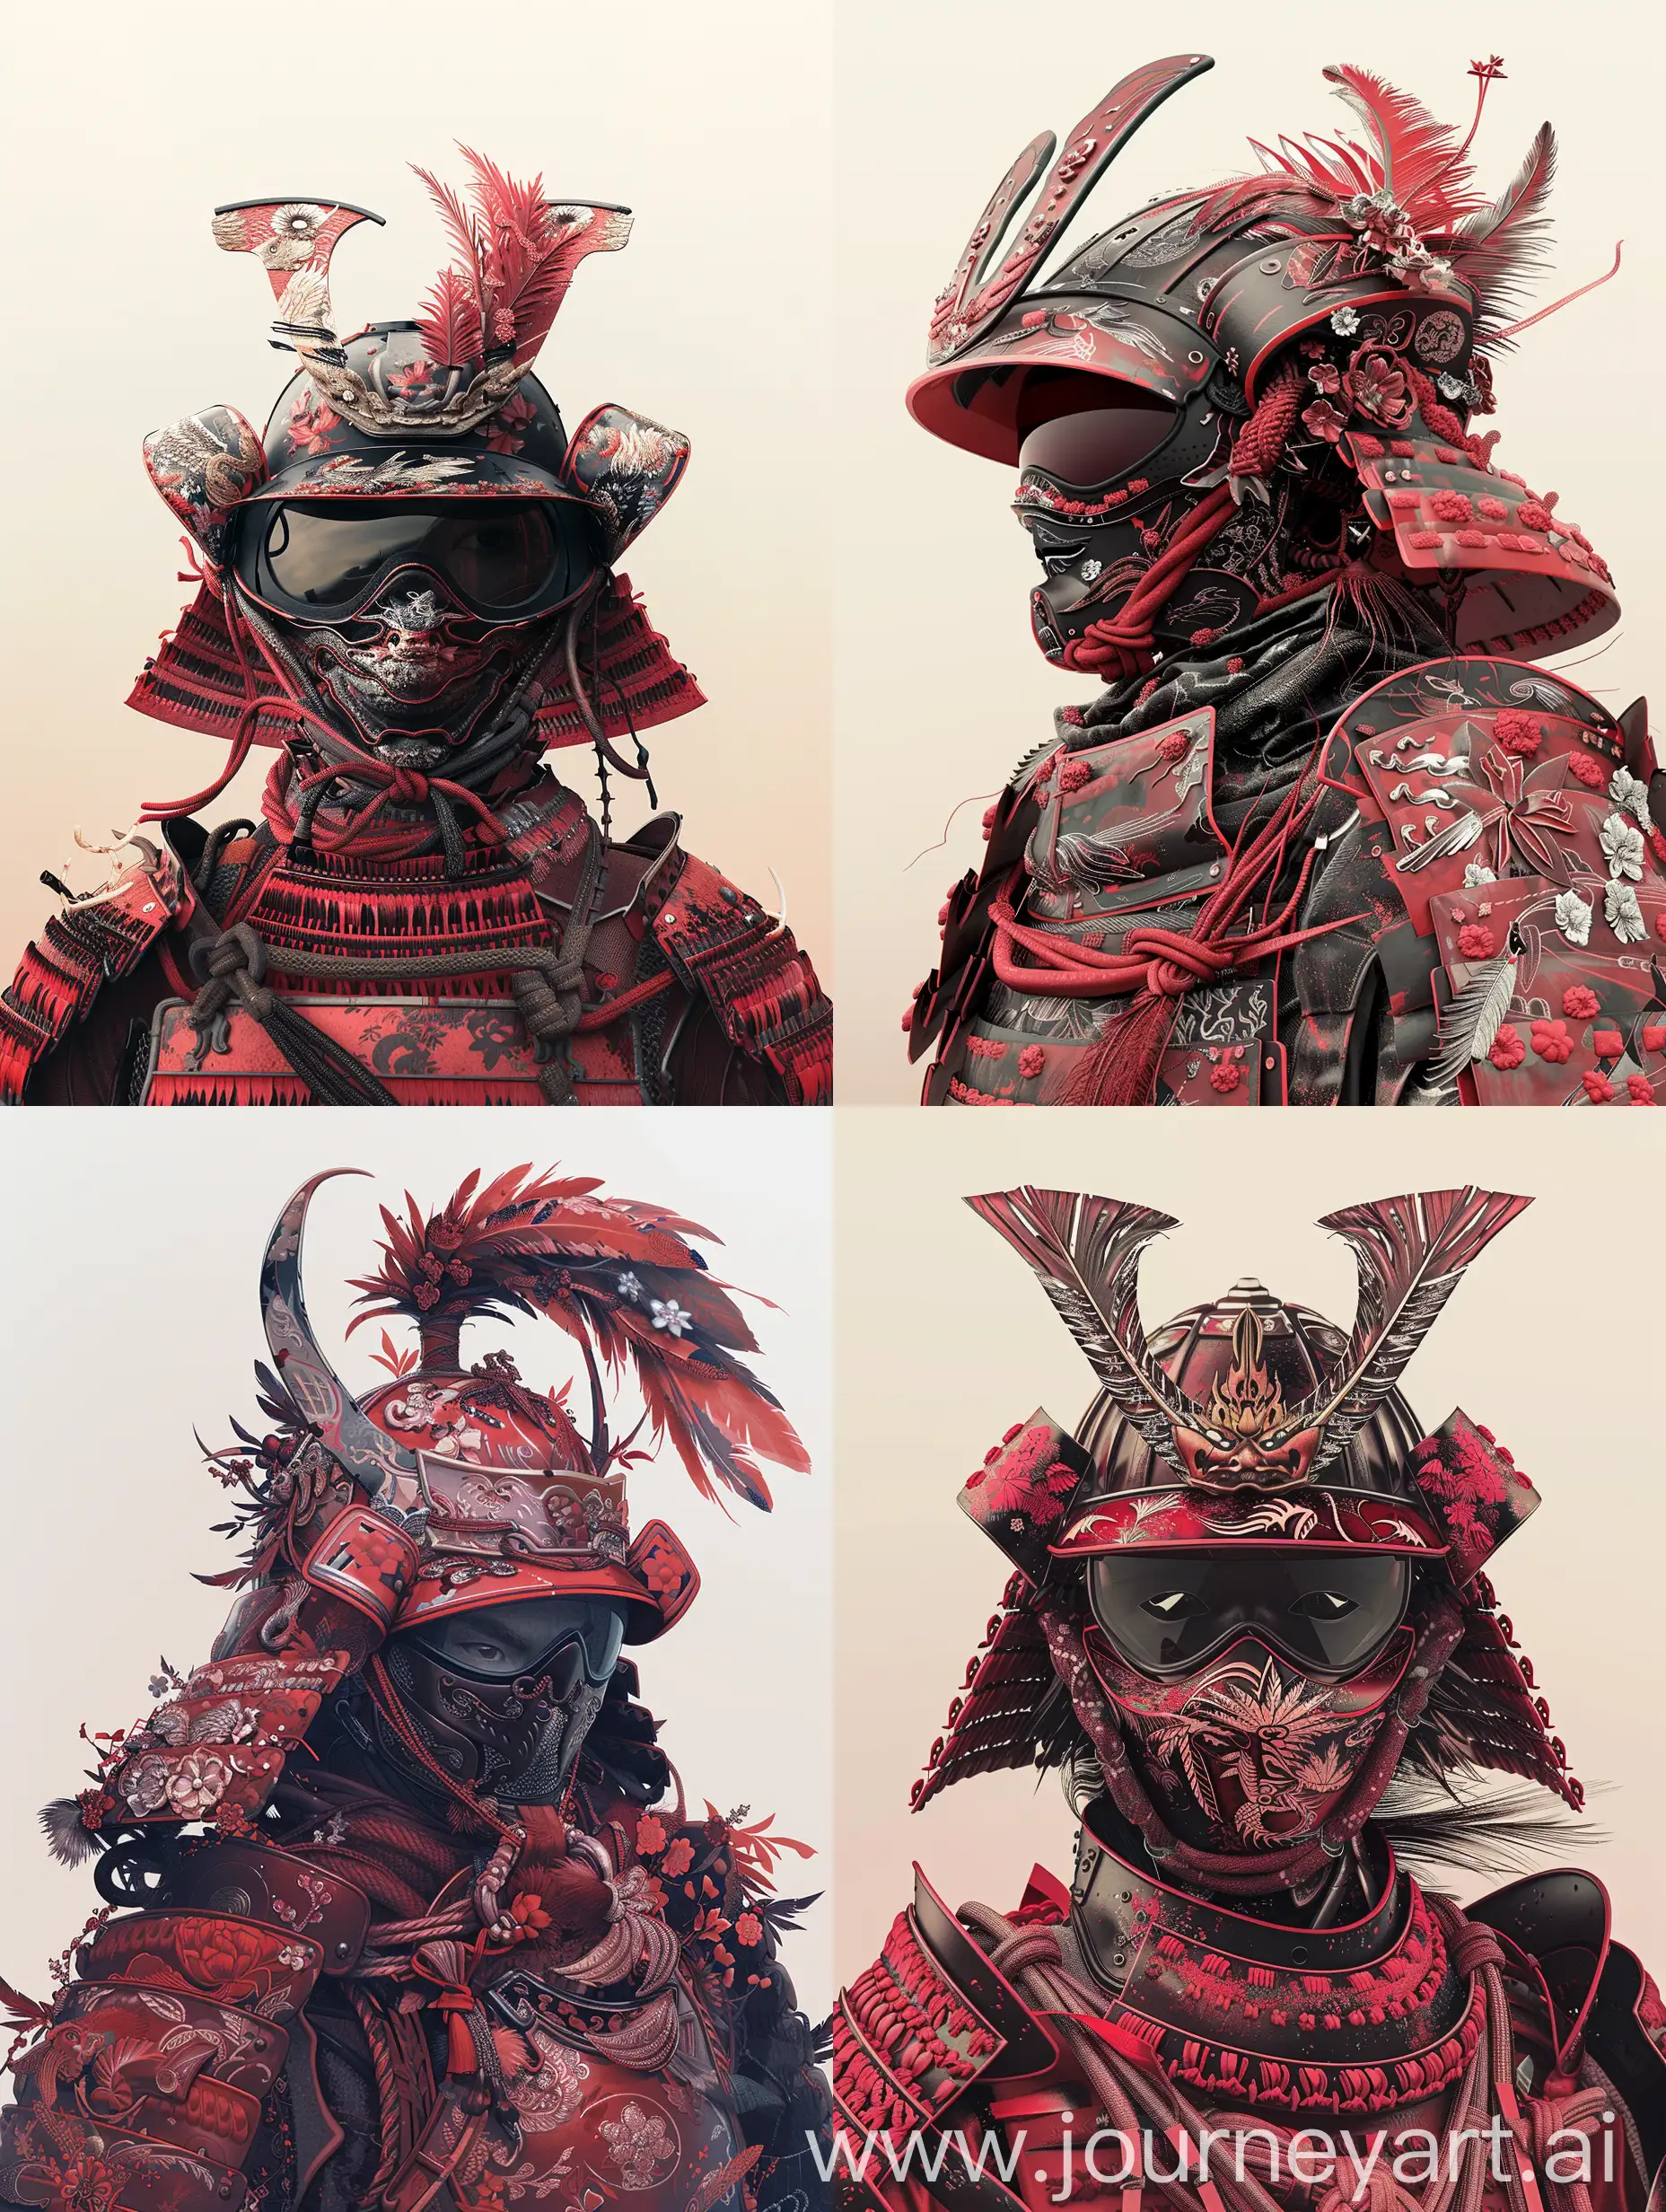 Elaborate-Red-Samurai-Armor-in-Tranquil-Temple-Setting